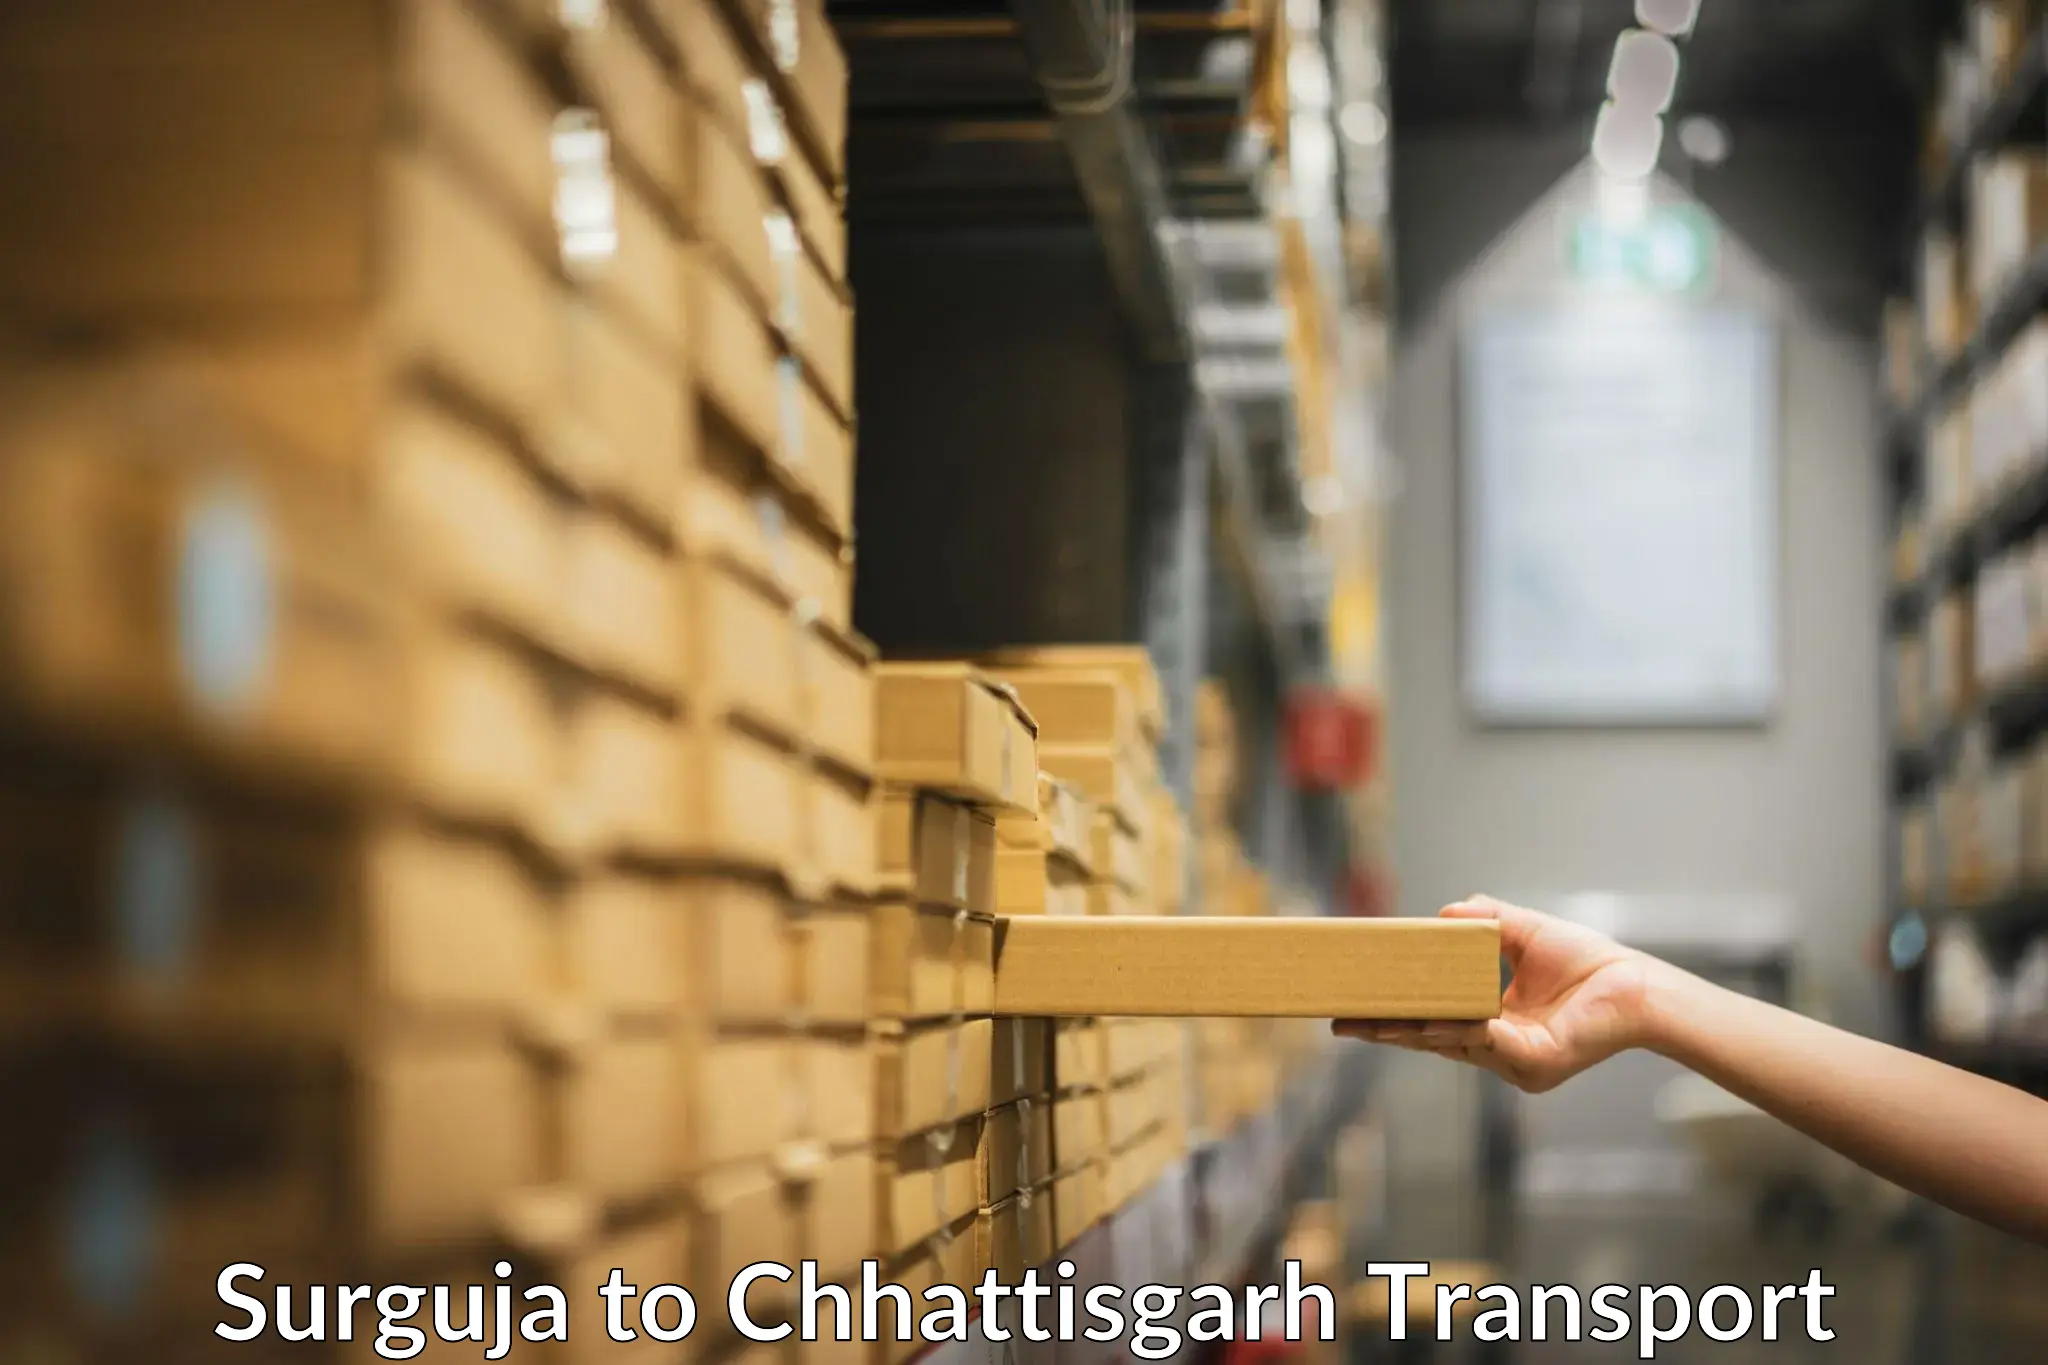 Package delivery services Surguja to Raigarh Chhattisgarh